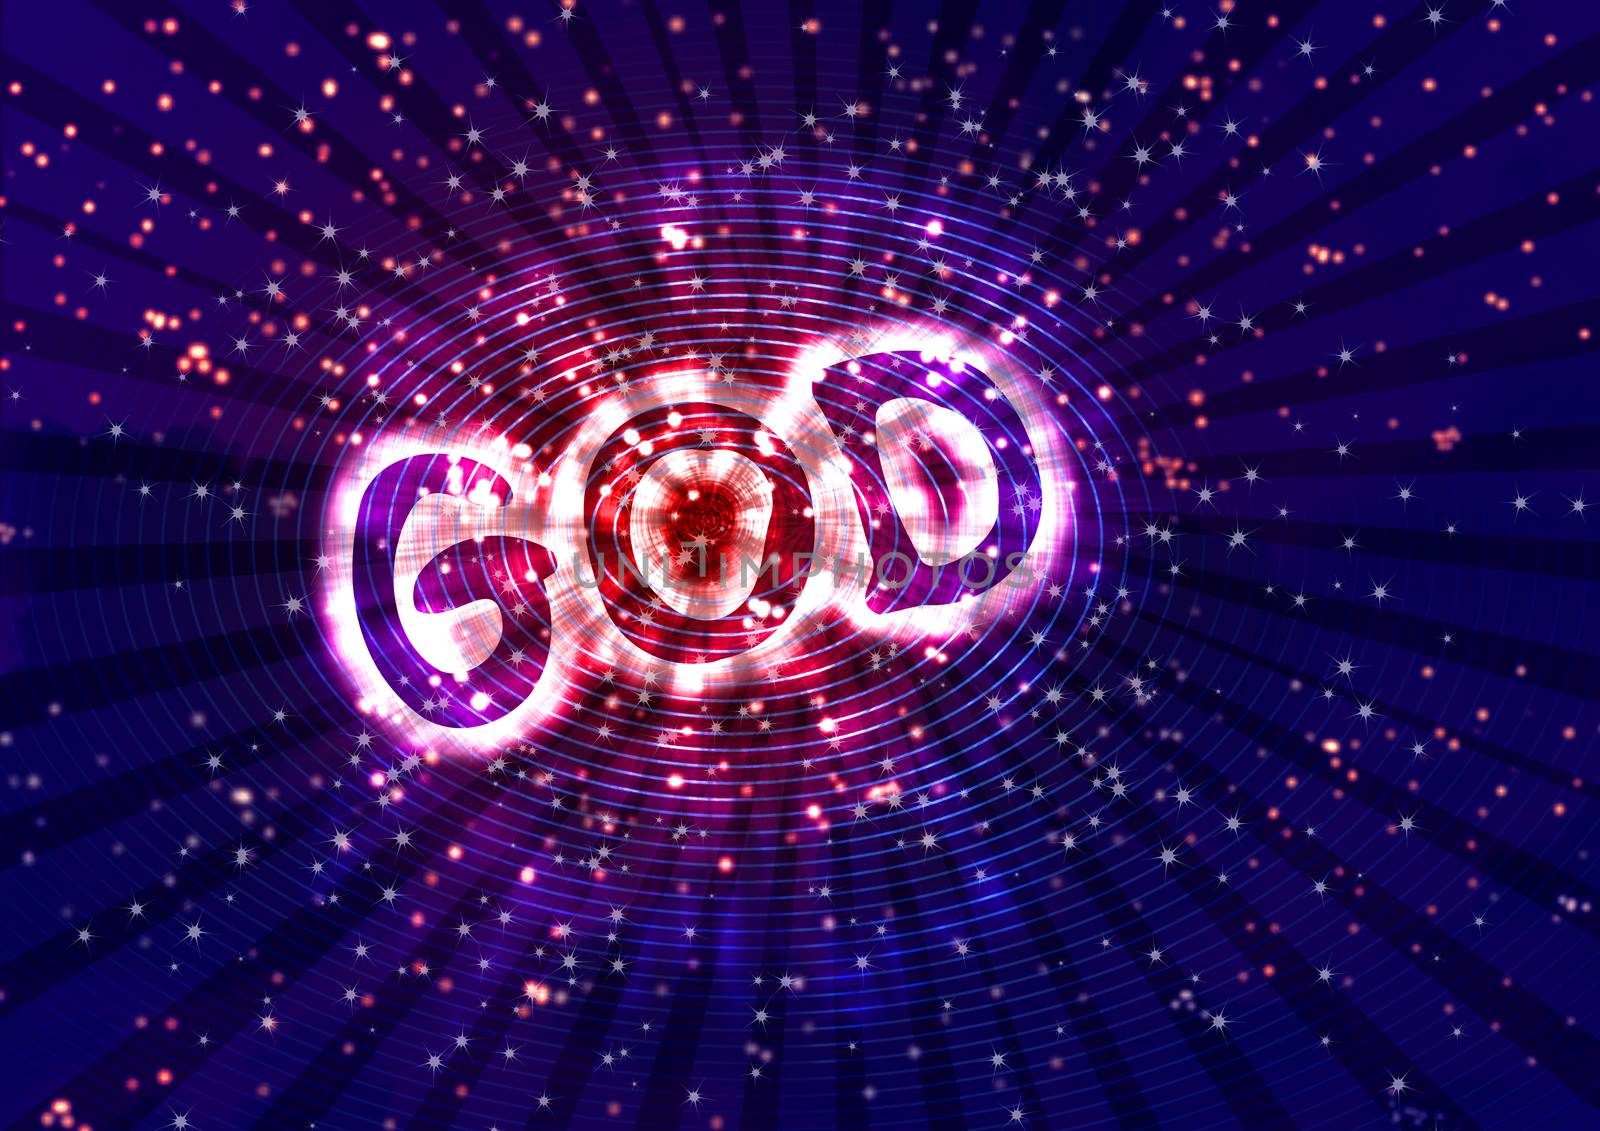 Power of God by grace21